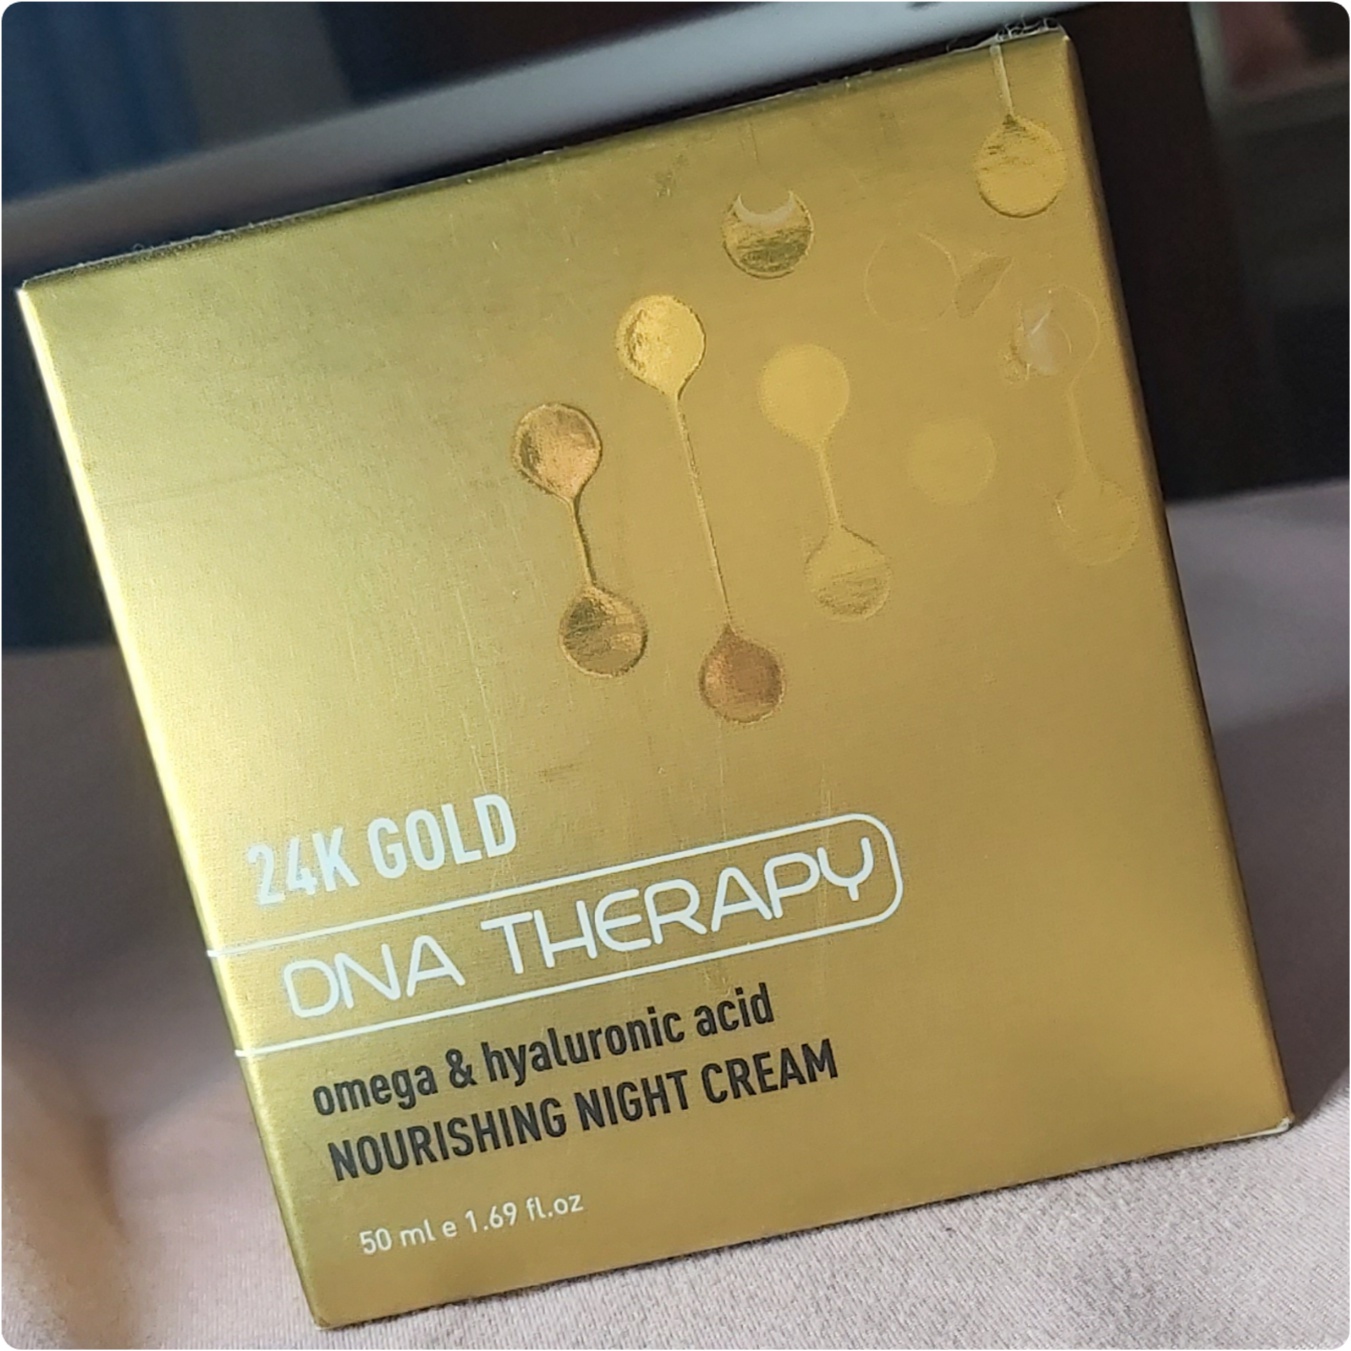 24K Gold DNA Therapy Omega & Hyaluronic Acid Nourishing Night Cream